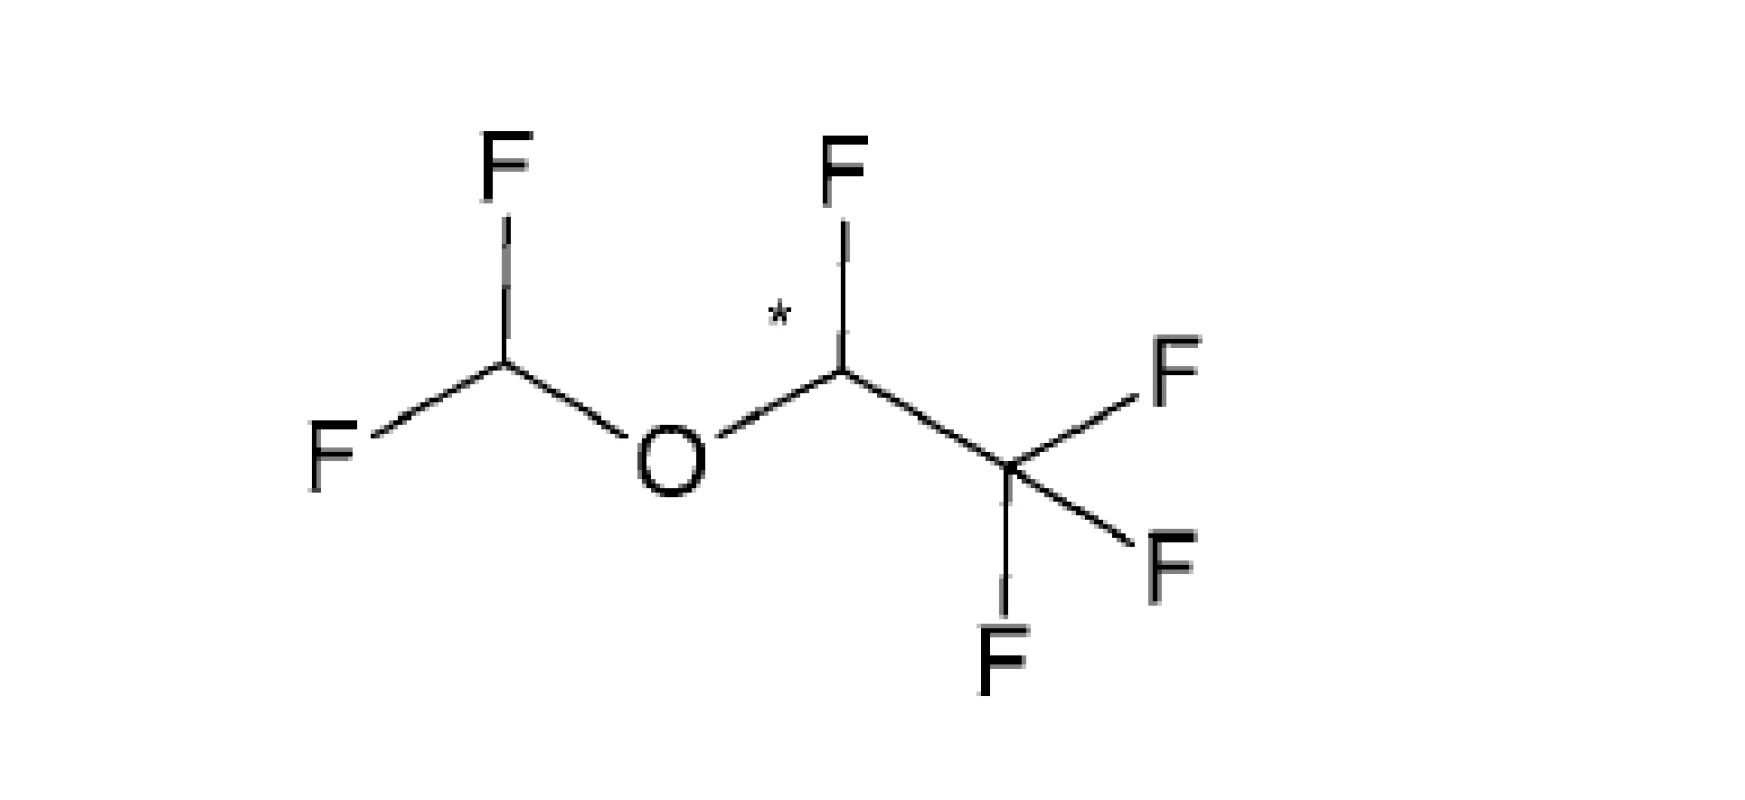 Štruktúry izomérov izofluránu<br>
(S)-izoflurán (R)-izoflurán